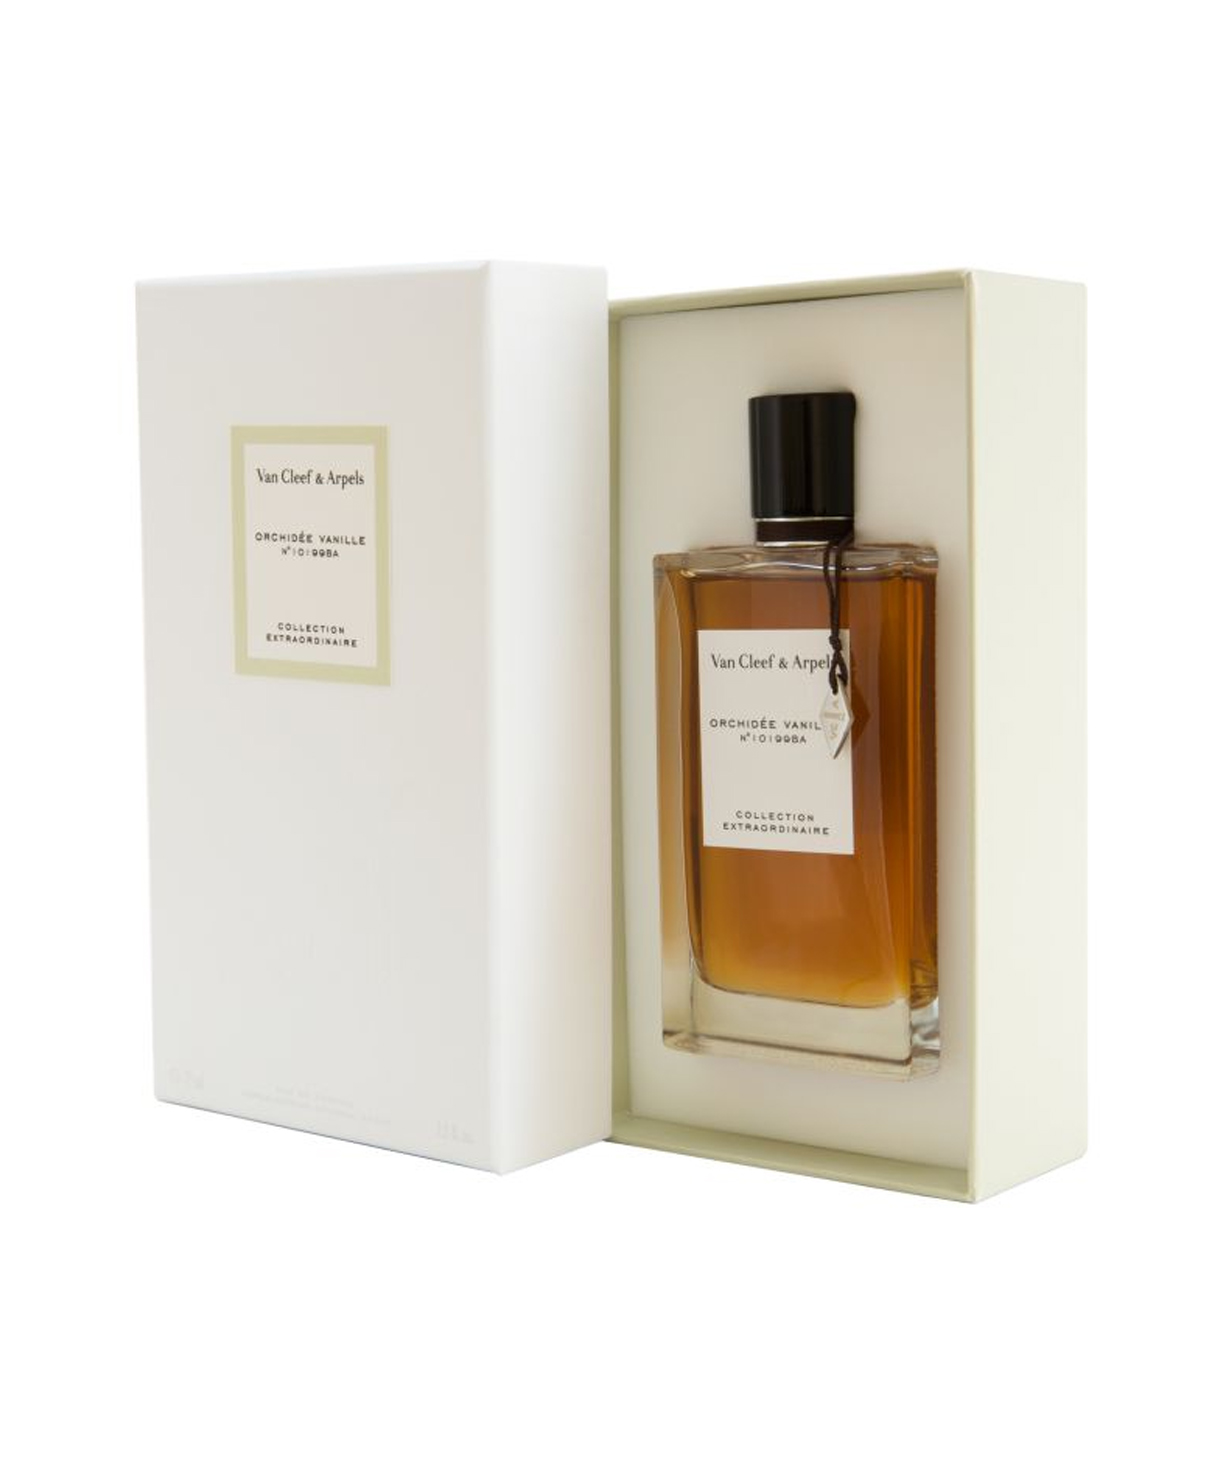 Perfume «Van Cleef & Arpels» Orchidee Vanille CE, for women, 75 ml